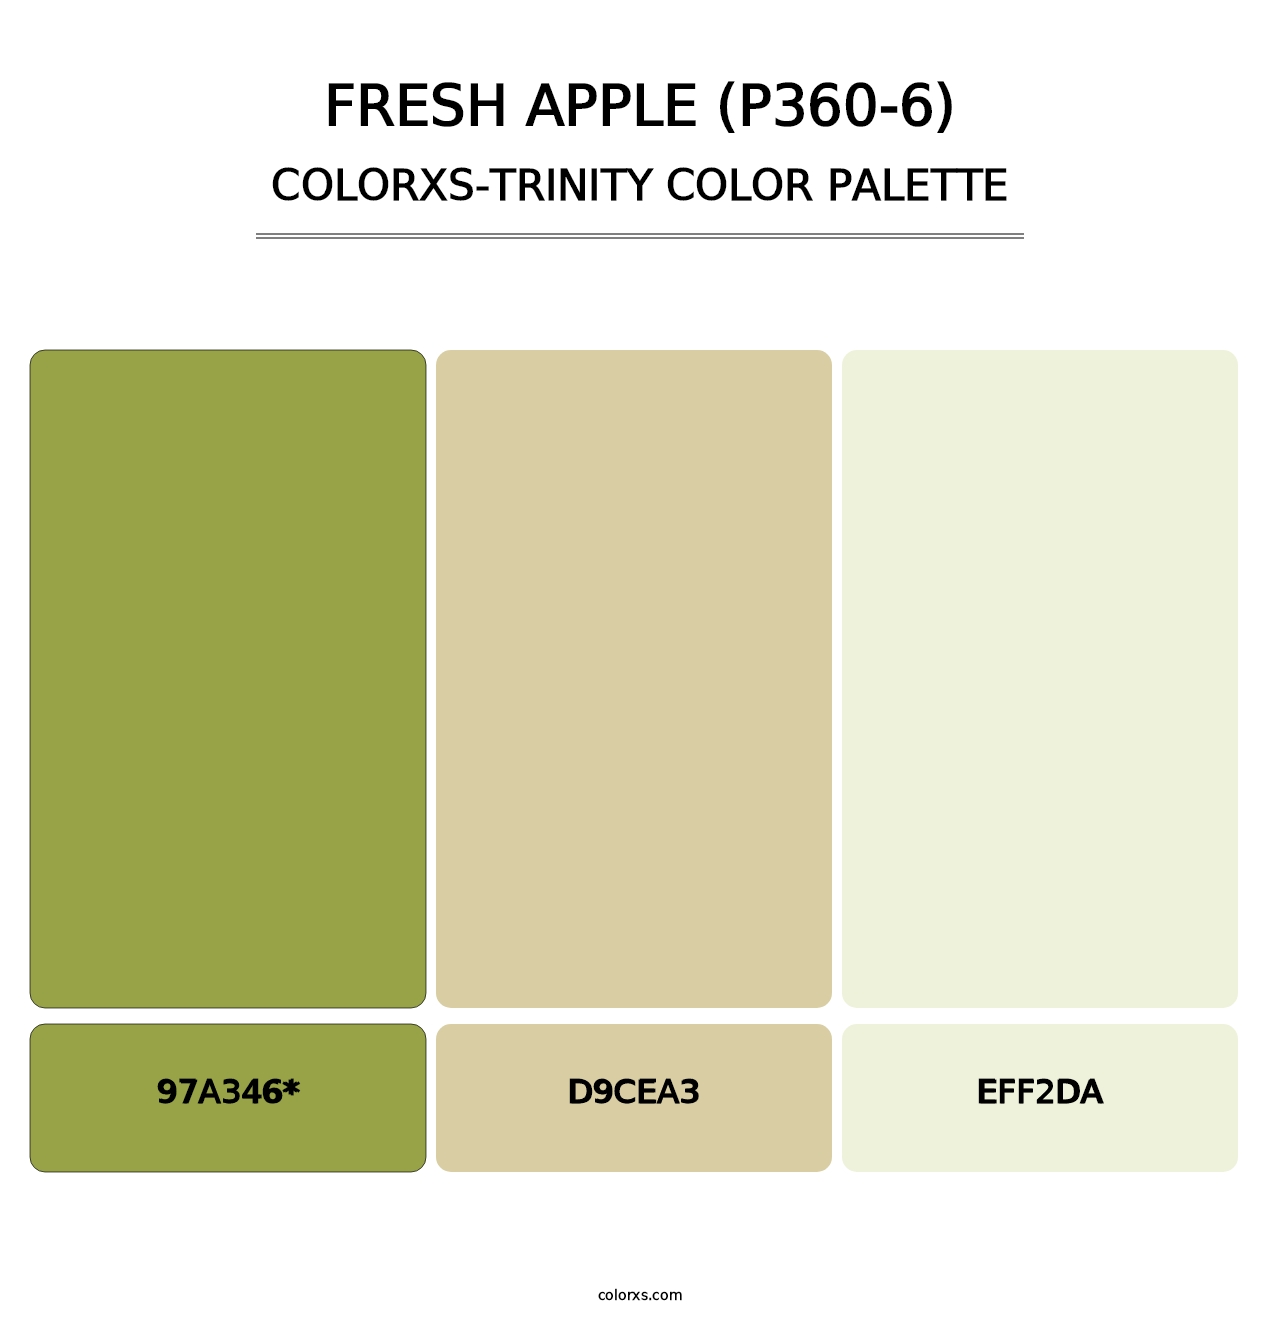 Fresh Apple (P360-6) - Colorxs Trinity Palette